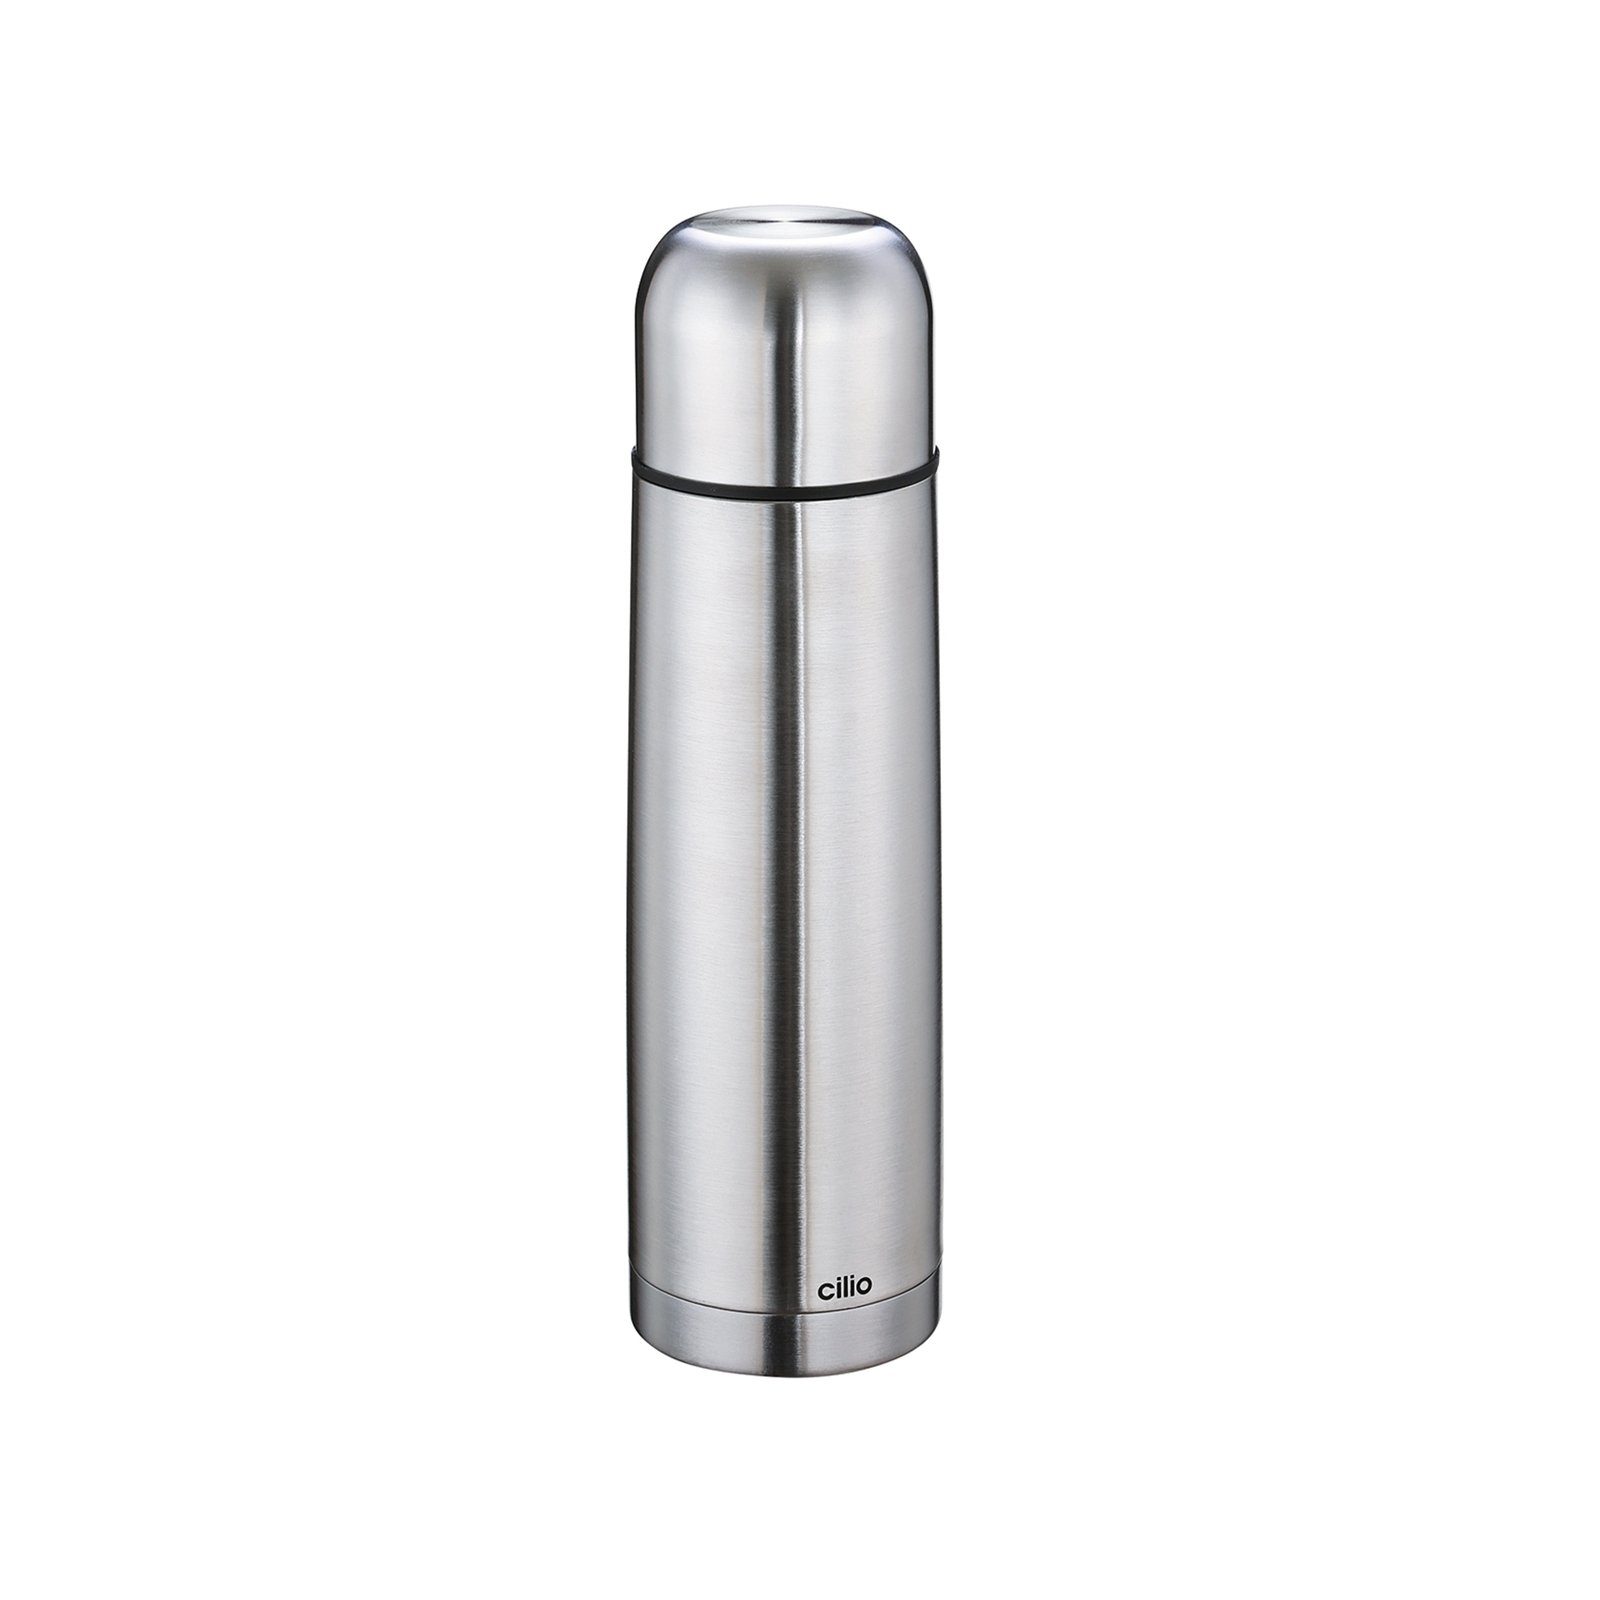 Cilio Isolierflasche Isolierflasche COLORE 0,75 Liter Silber